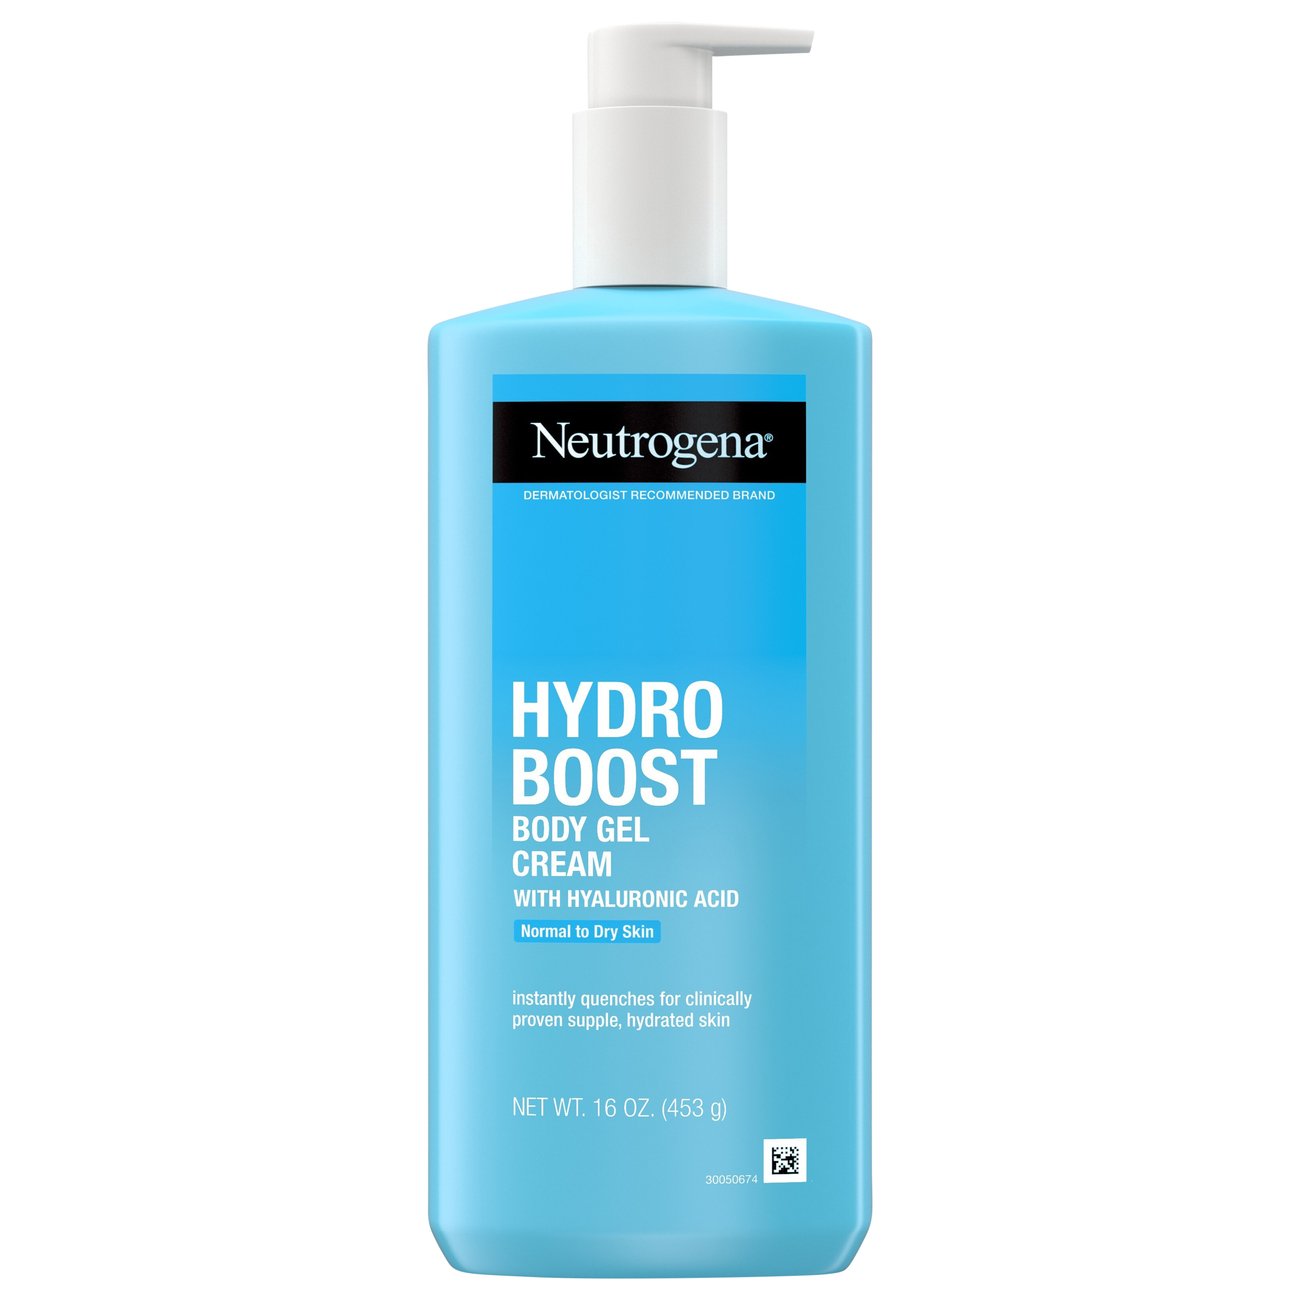 Neutrogena Hydro Boost Body Gel - Shop Bath & Skin Care at H-E-B